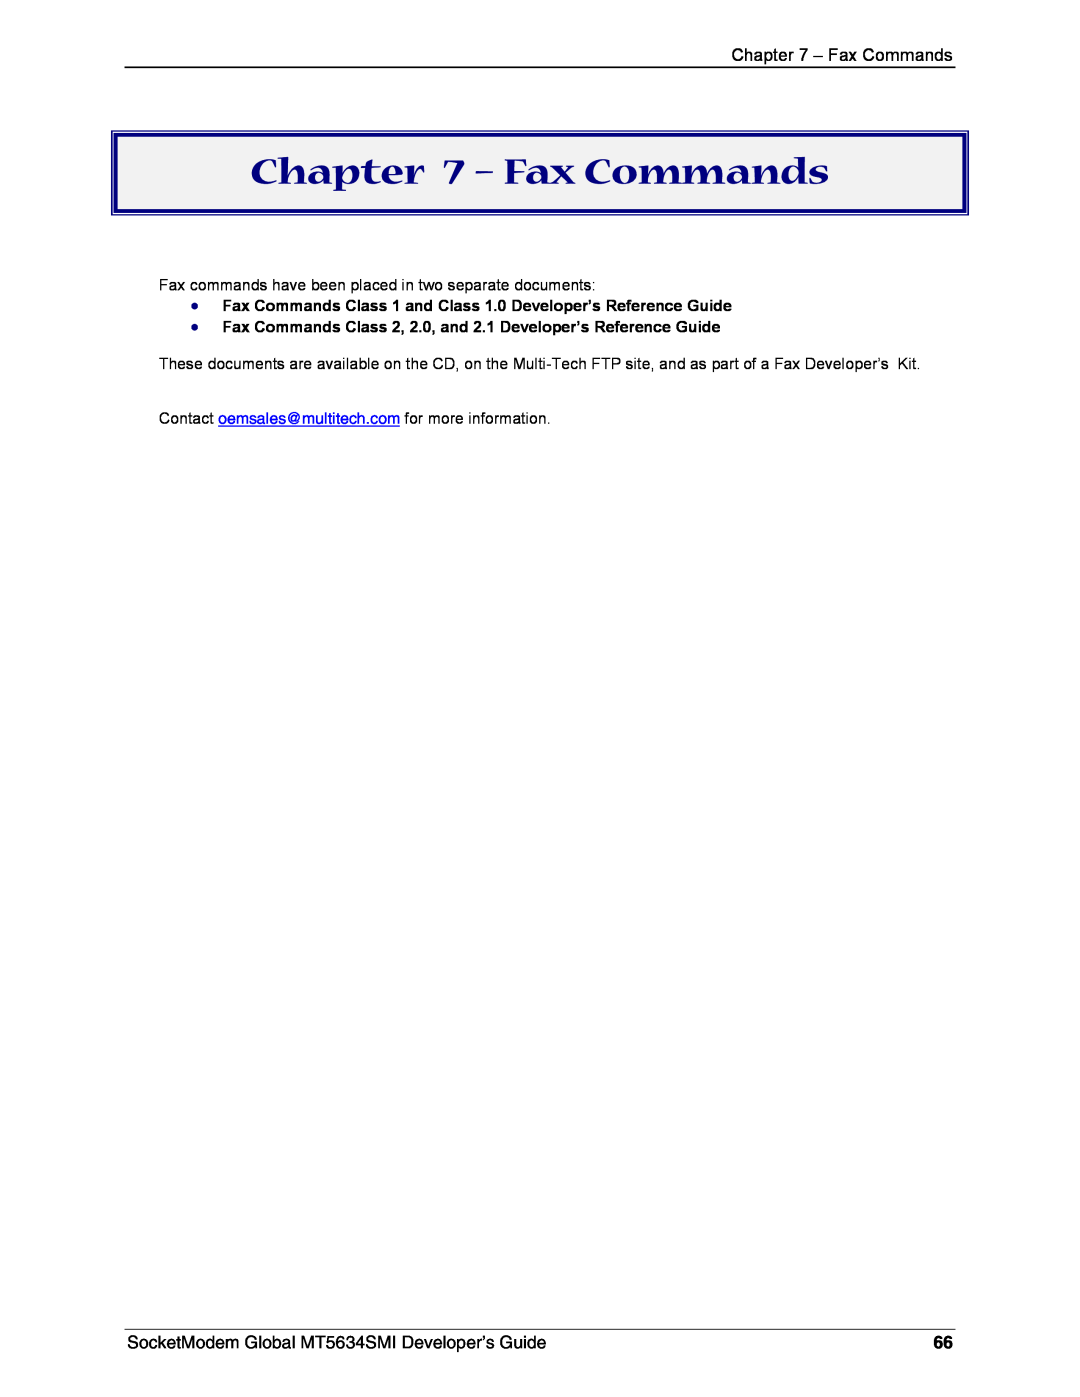 Technics MT5634SMI-92, MT5634SMI-34 manual Fax Commands, SocketModem Global MT5634SMI Developer’s Guide 